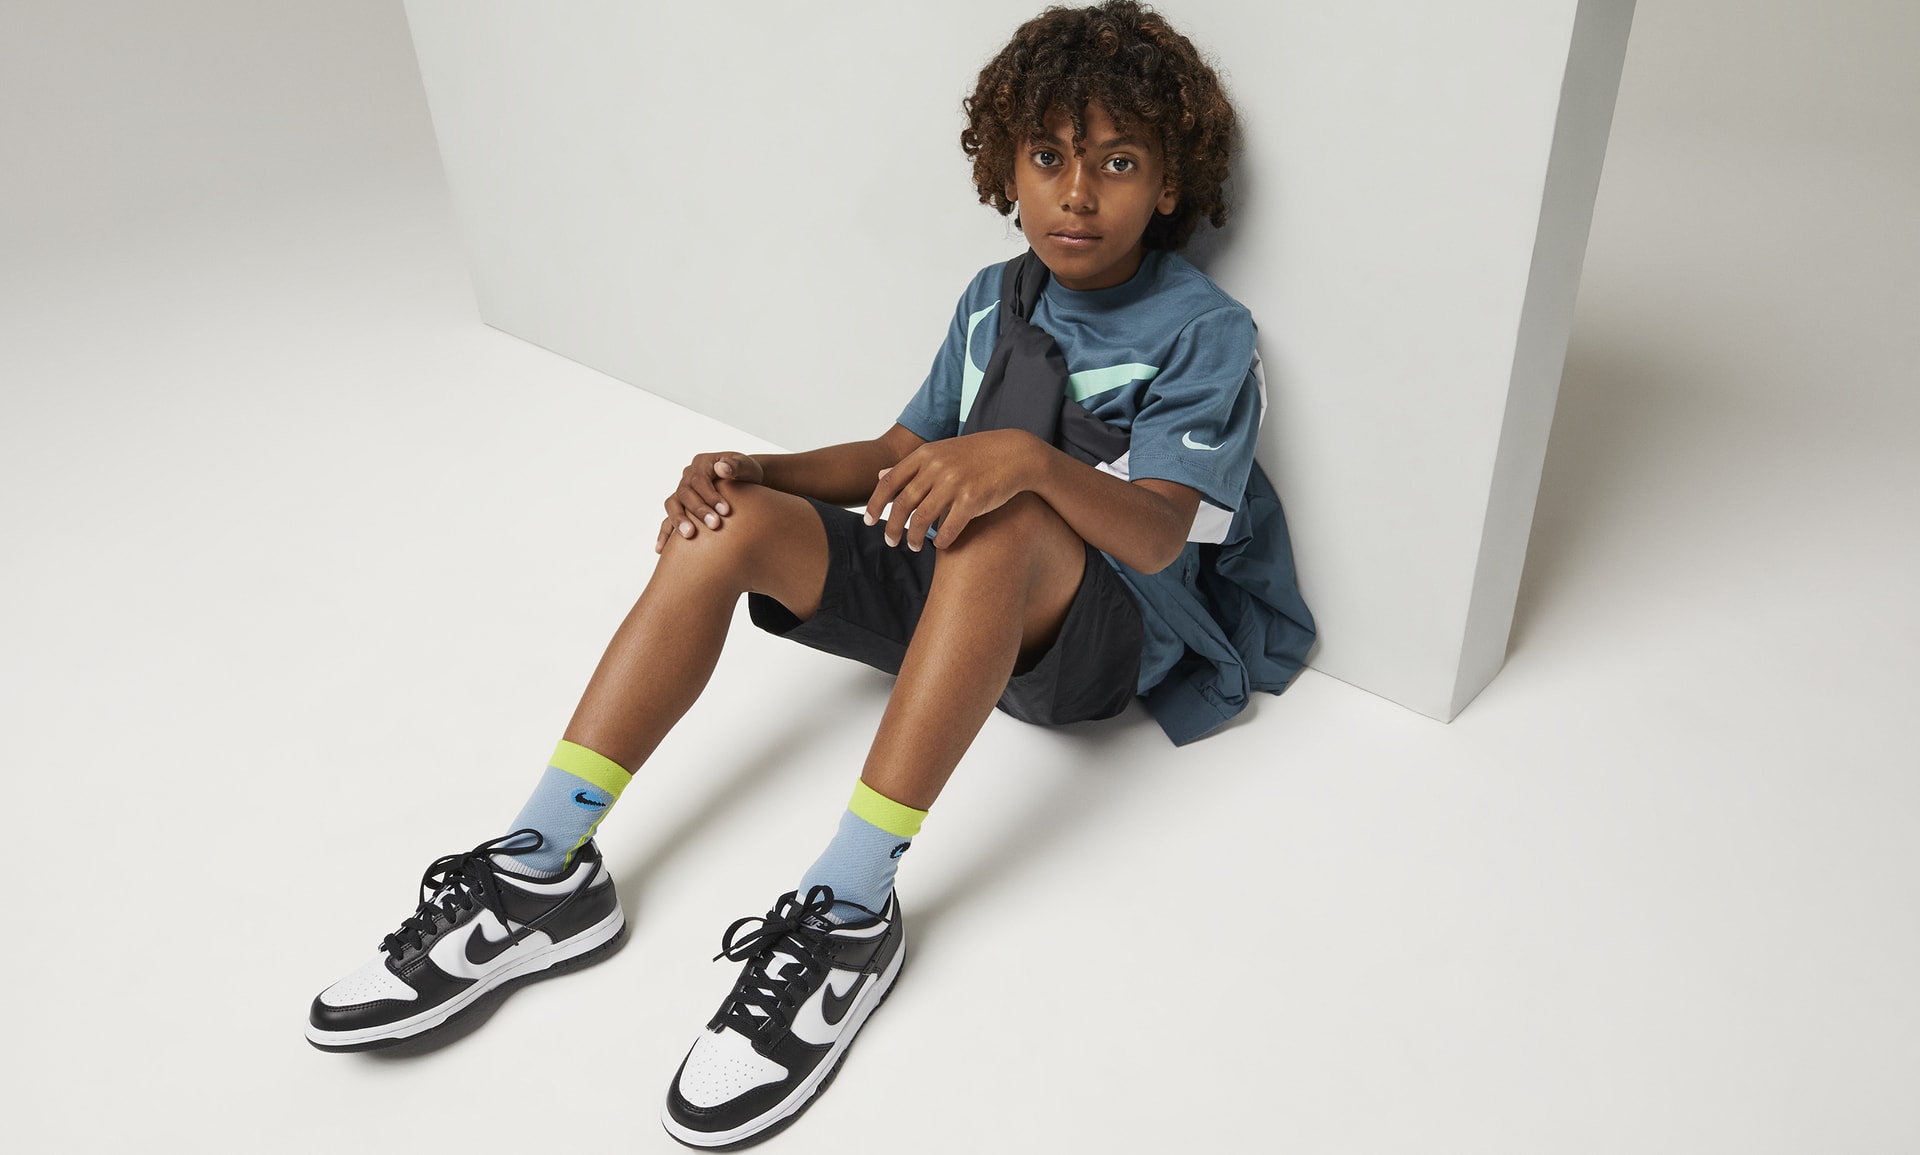 Nike Dunk Low Big Kids' Shoes